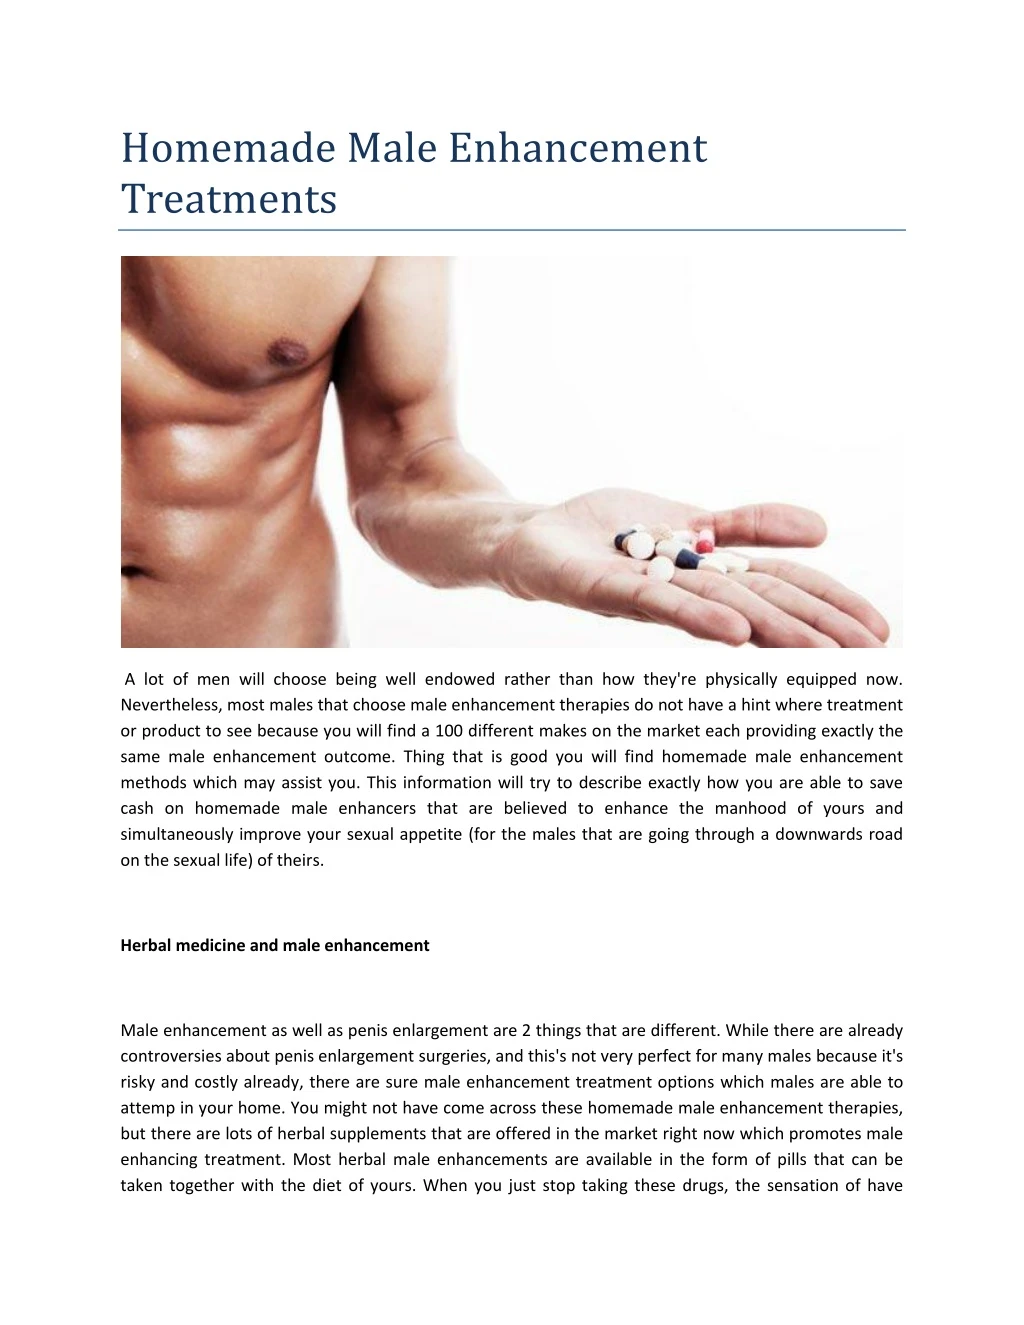 homemade male enhancement treatments